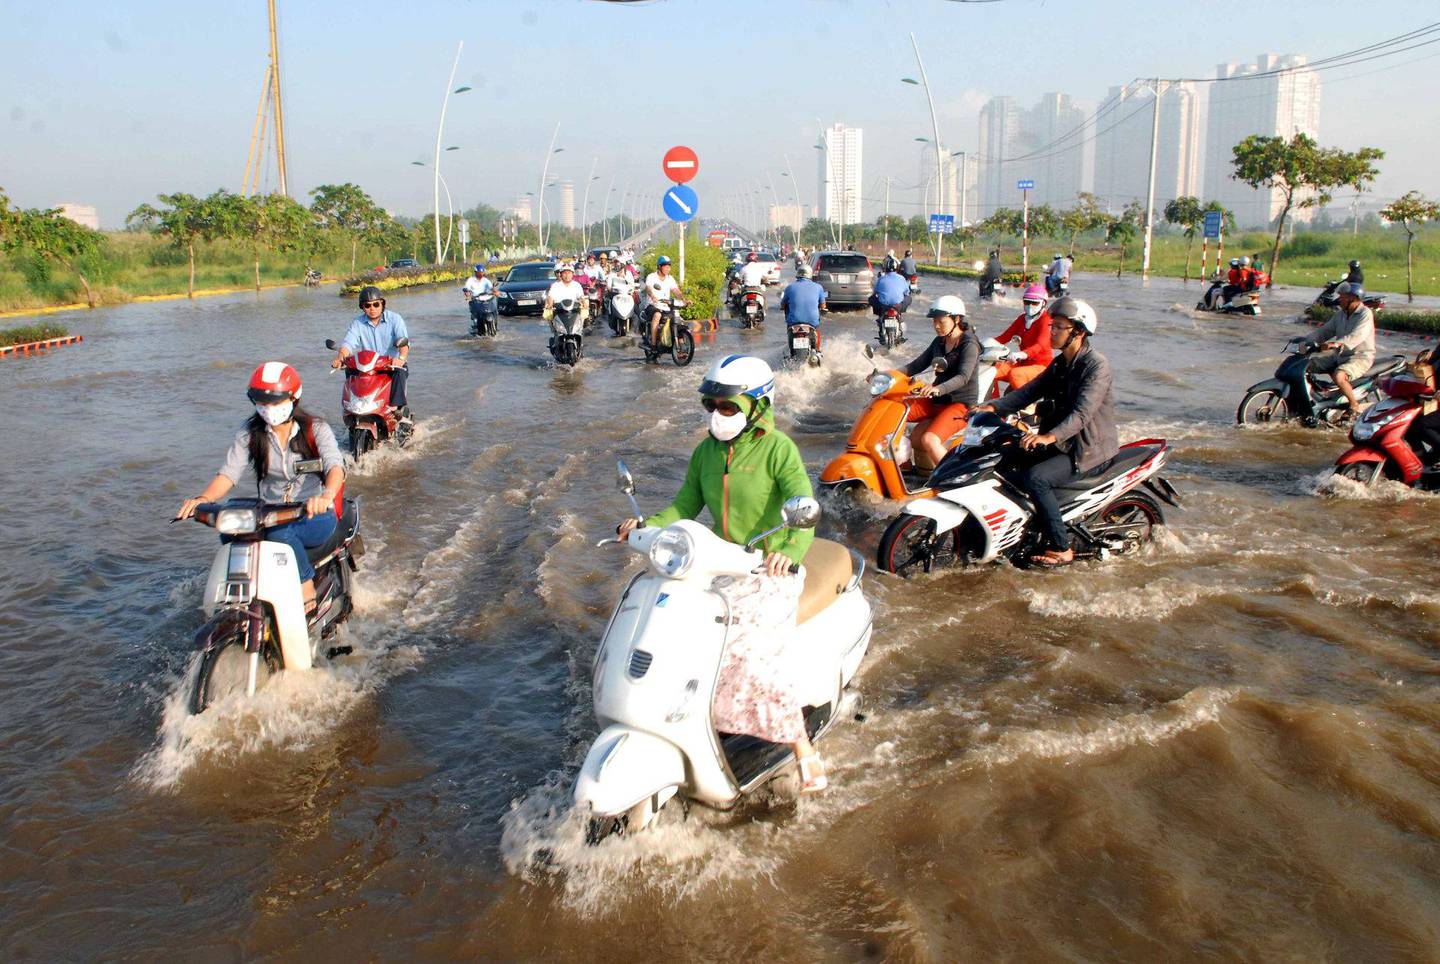 HO CHI MINH: Motorsyklister baner seg vei i vannet i Ho Chi Minh, tidligere Saigon, i Vietnam. FOTO: NTB SCANPIX